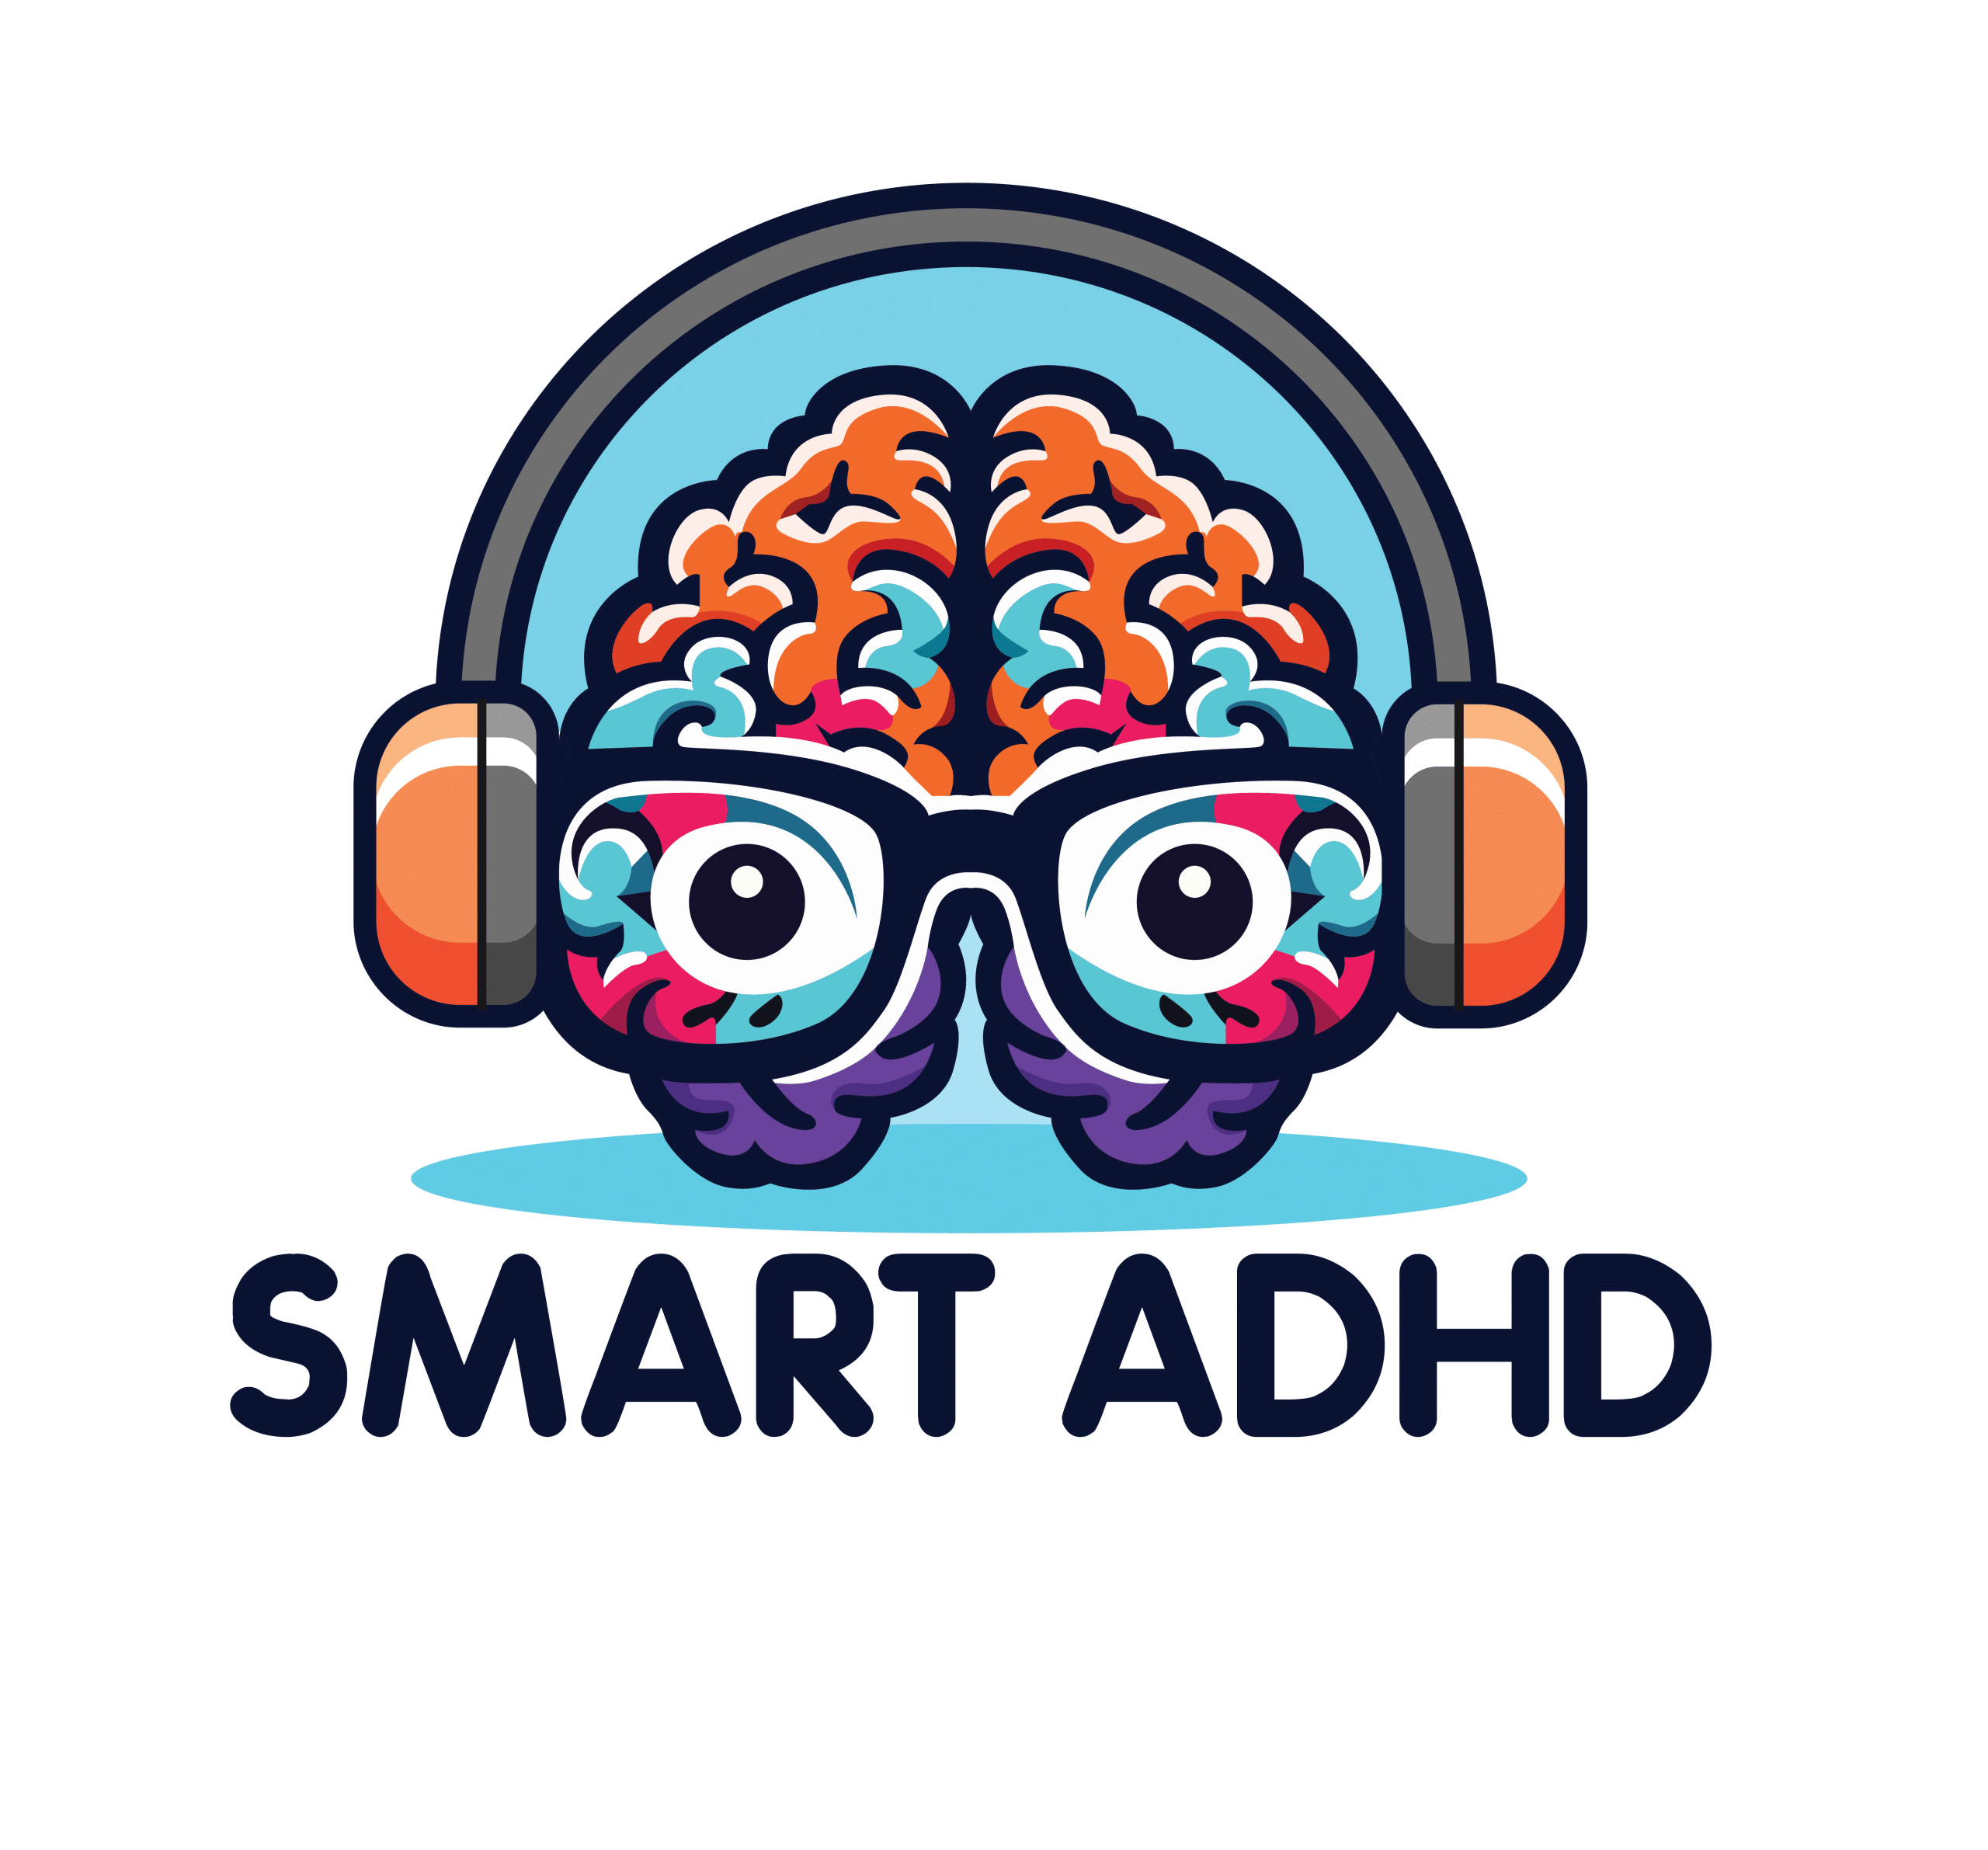 Smart ADHD